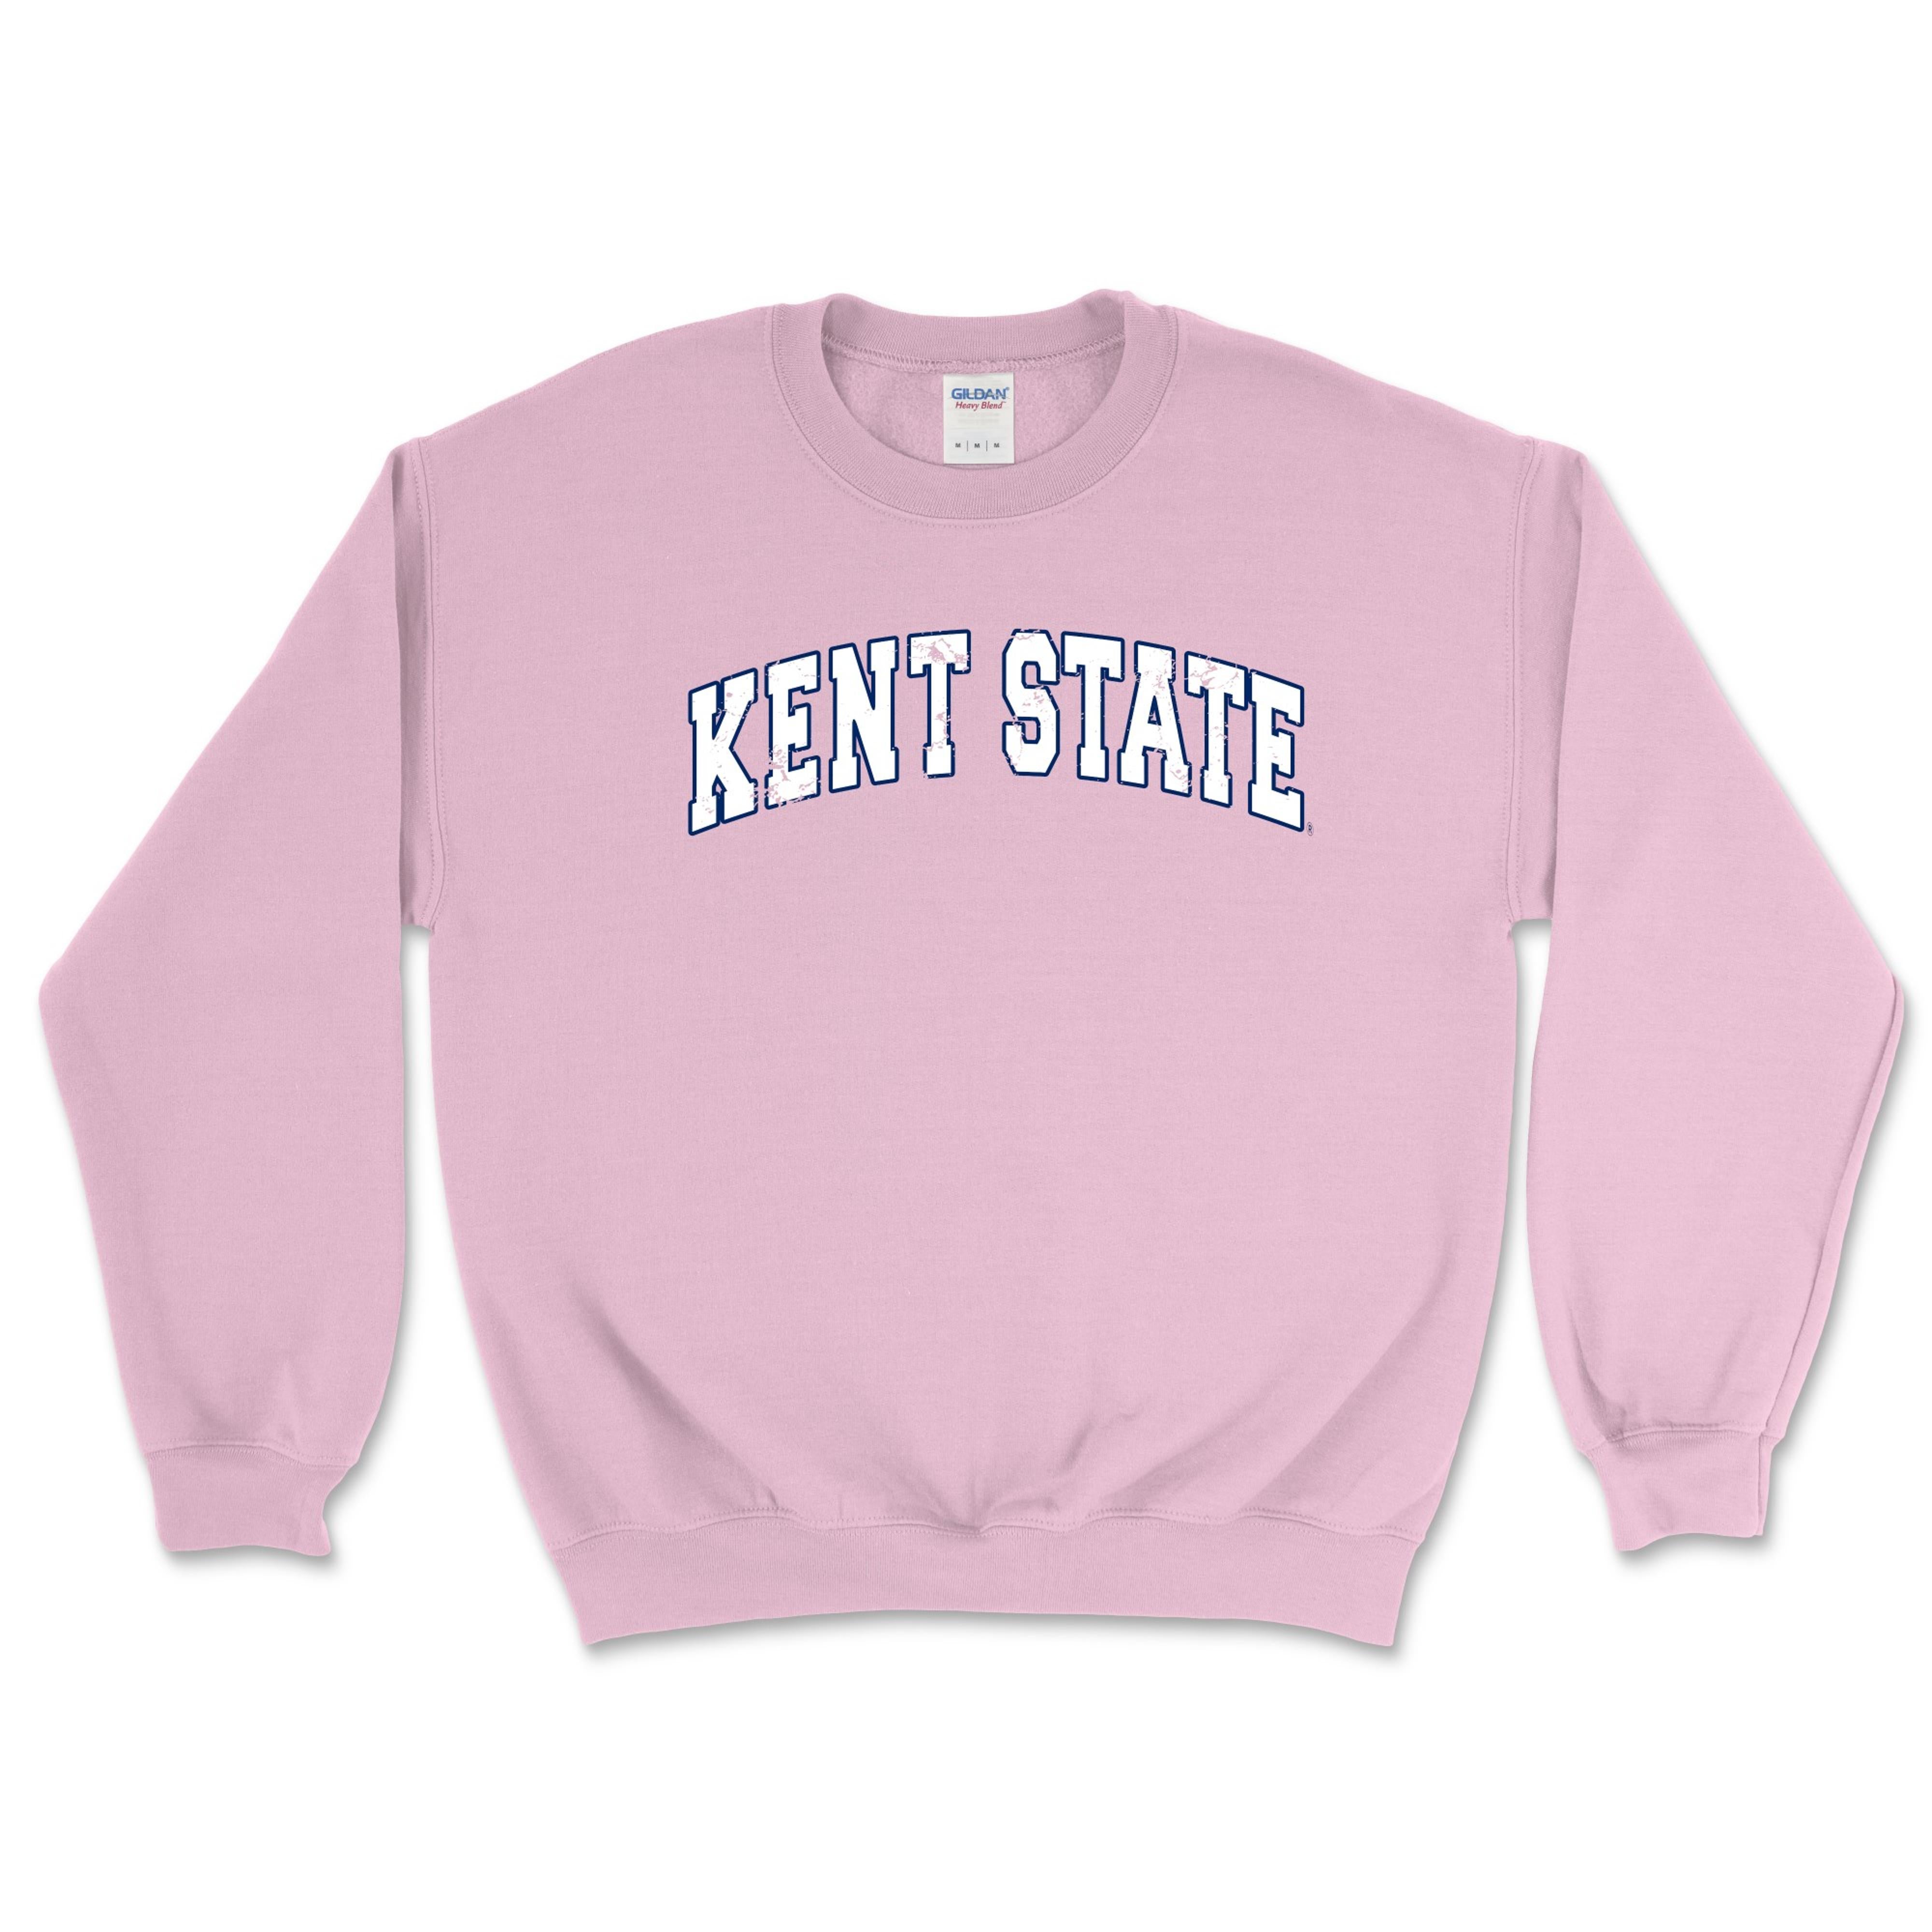 Kent State Pink Arched Crewneck Sweatshirt